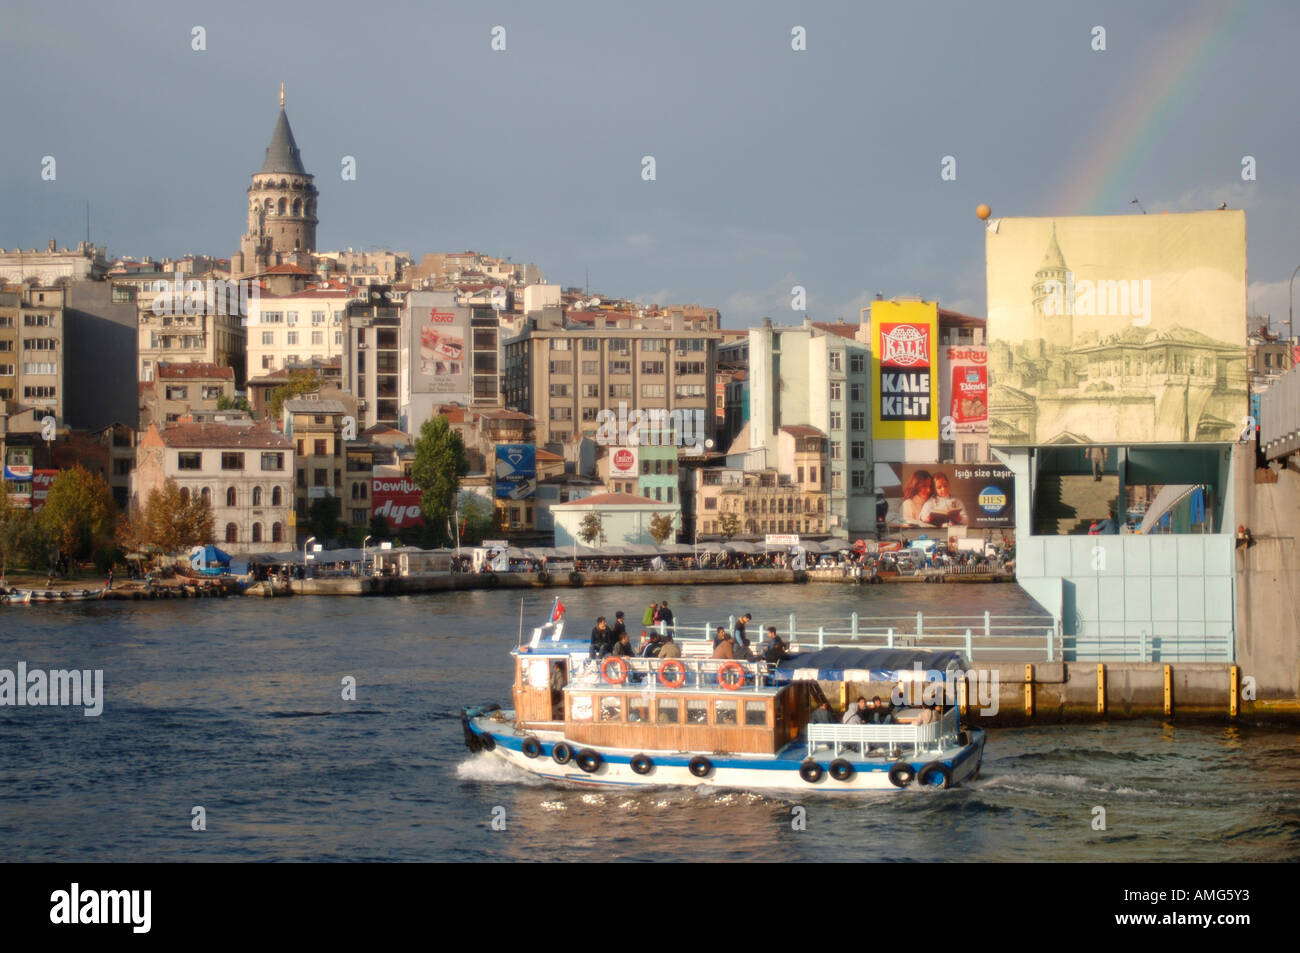 Türkei, Istanbul, Goldenes Horn mit Galatabrücke, Stadtteil Karaköy und Galataturm Stock Photo